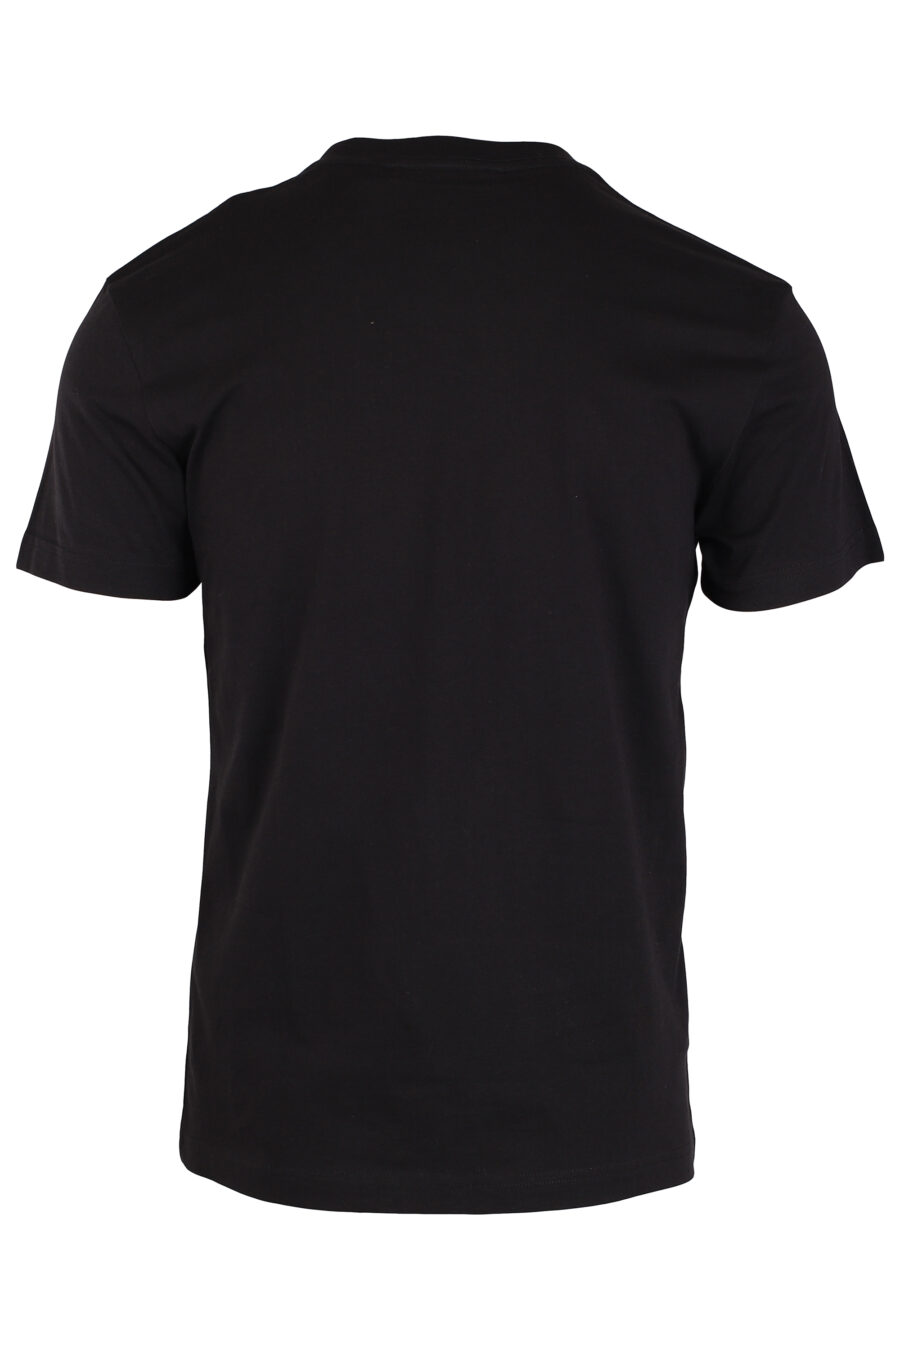 Camiseta negra con logo redondo pequeño dorado - IMG 3999